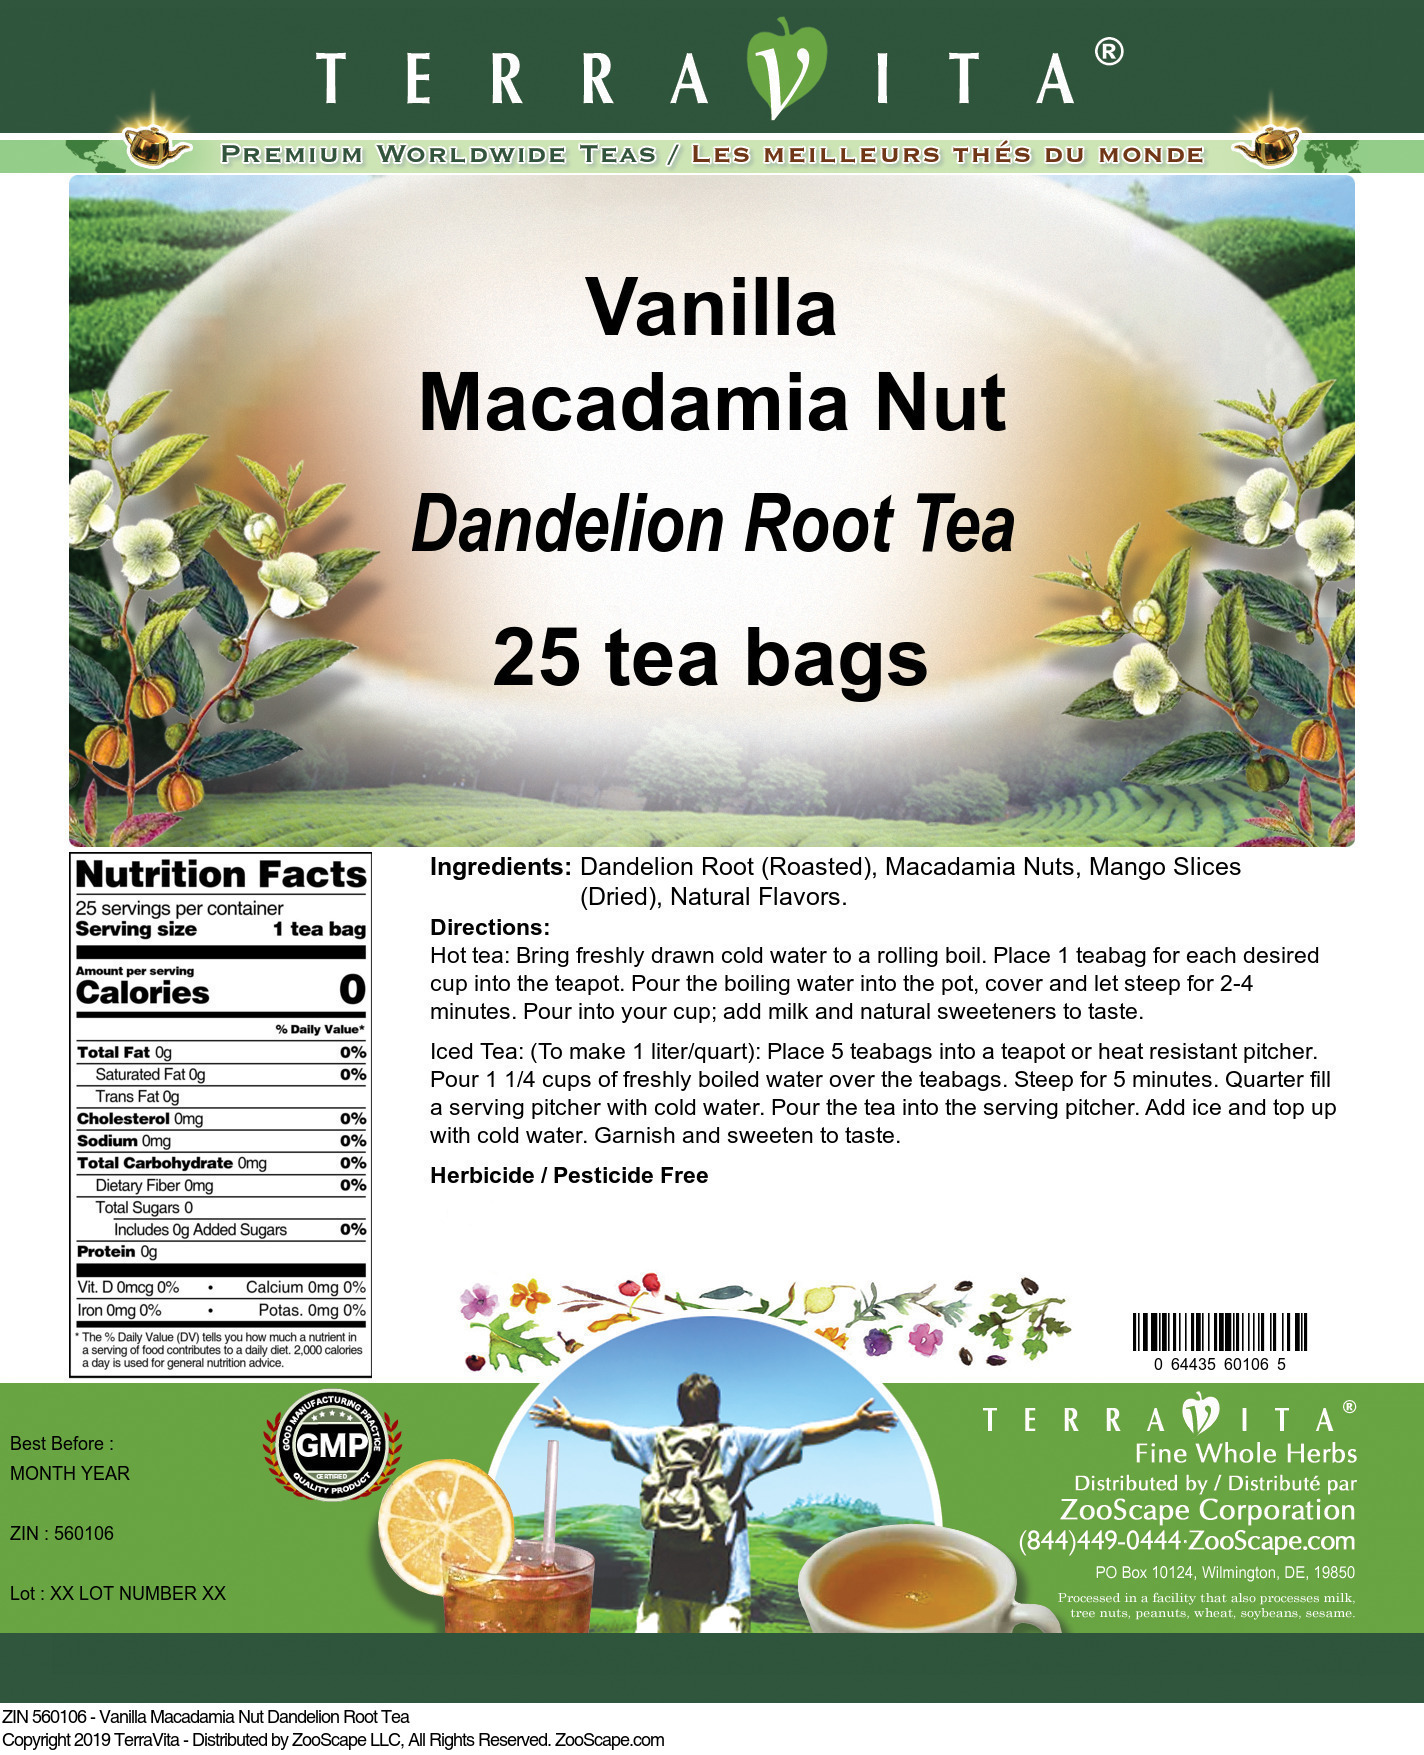 Vanilla Macadamia Nut Dandelion Root Tea - Label